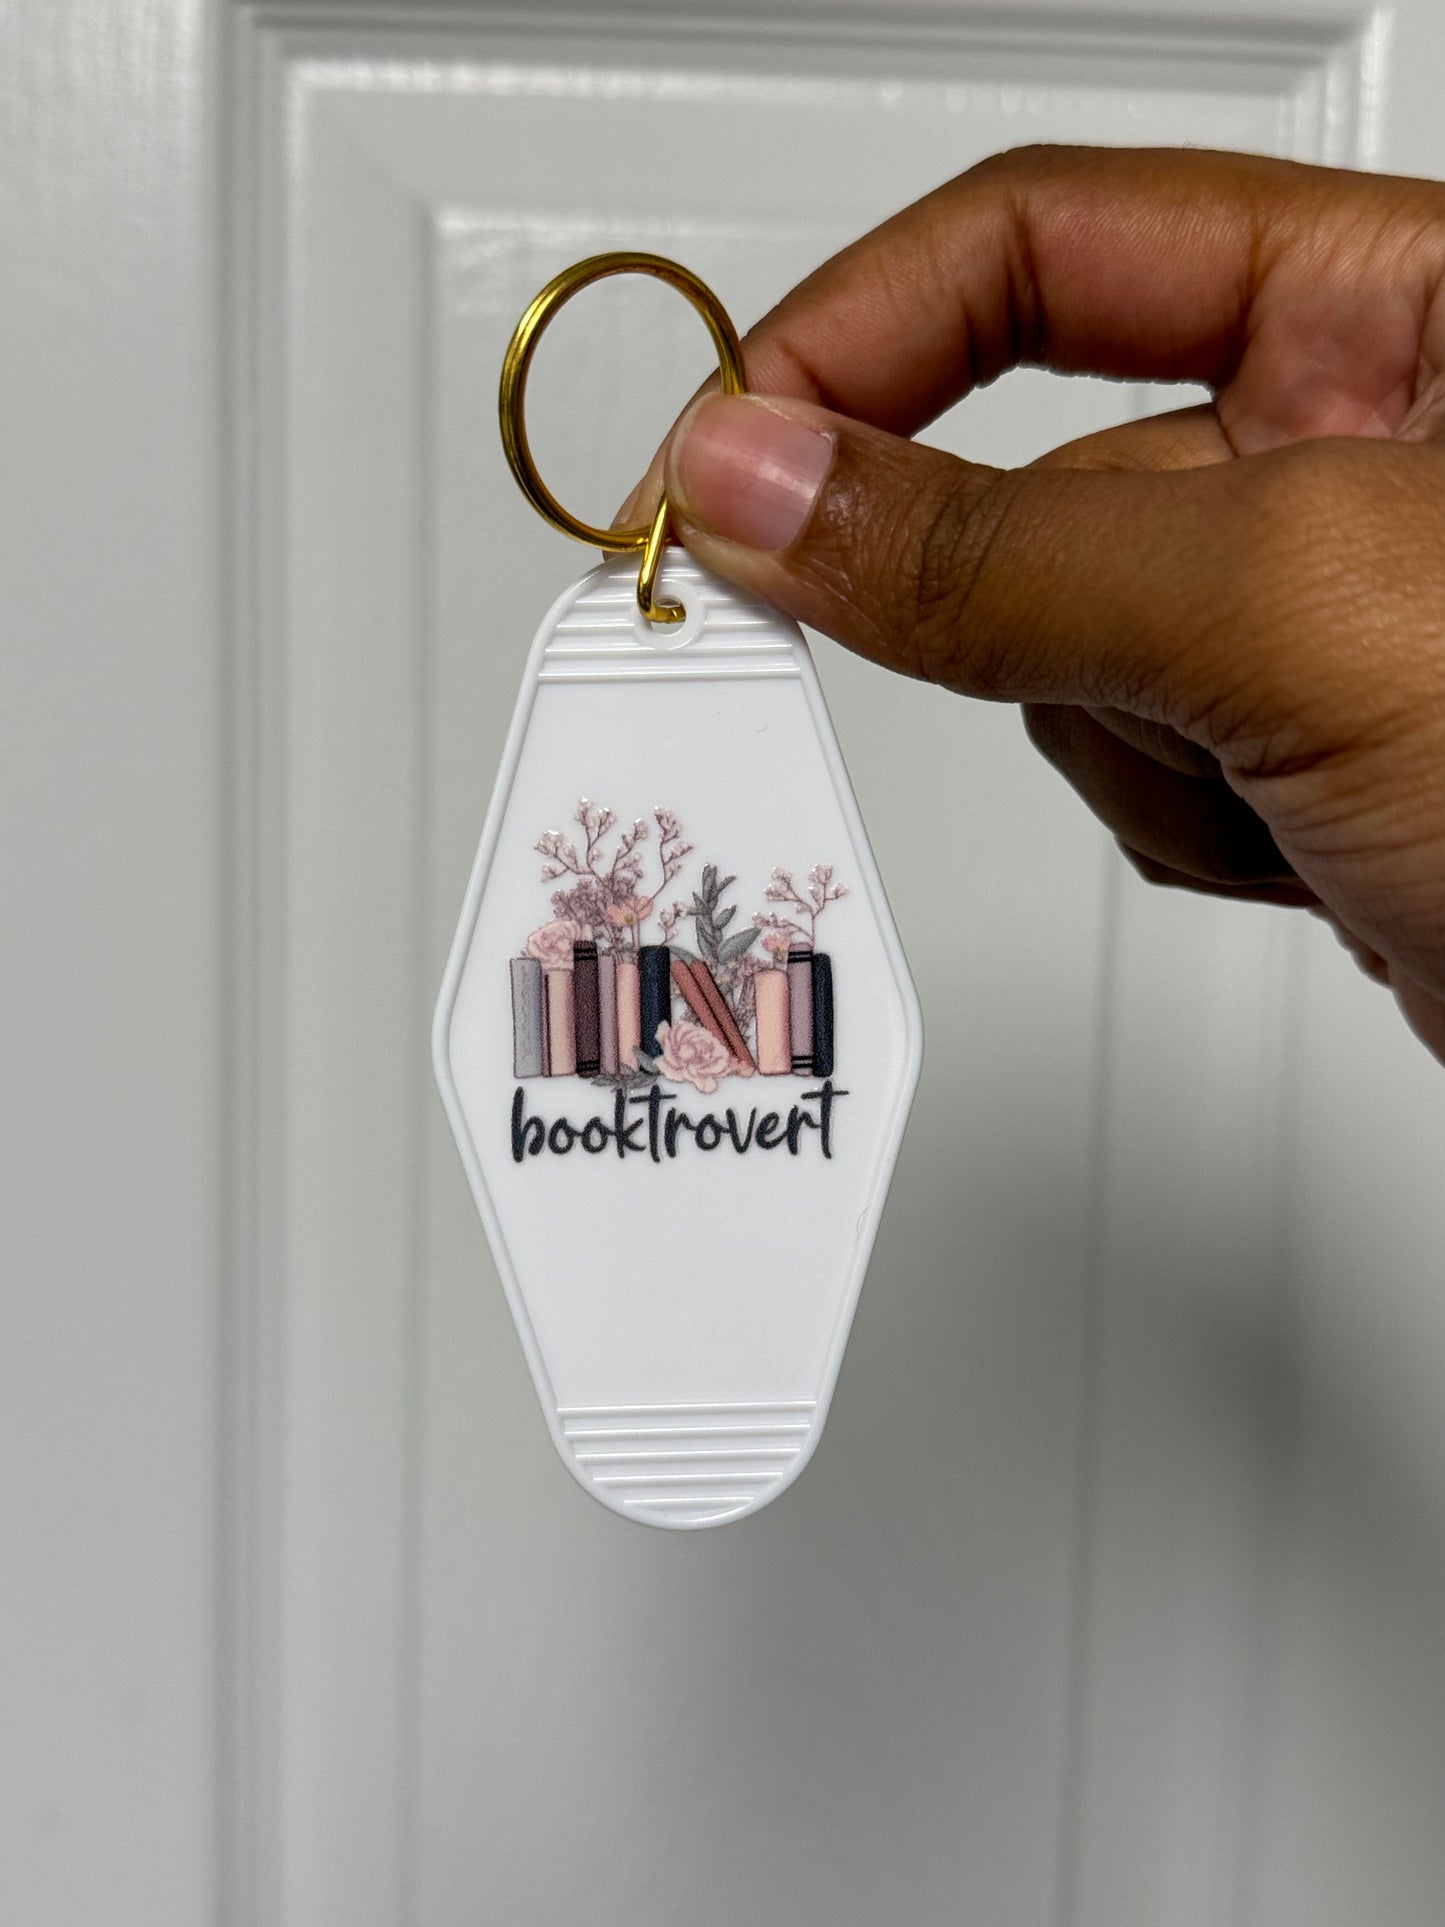 The Booktrovert Keychain